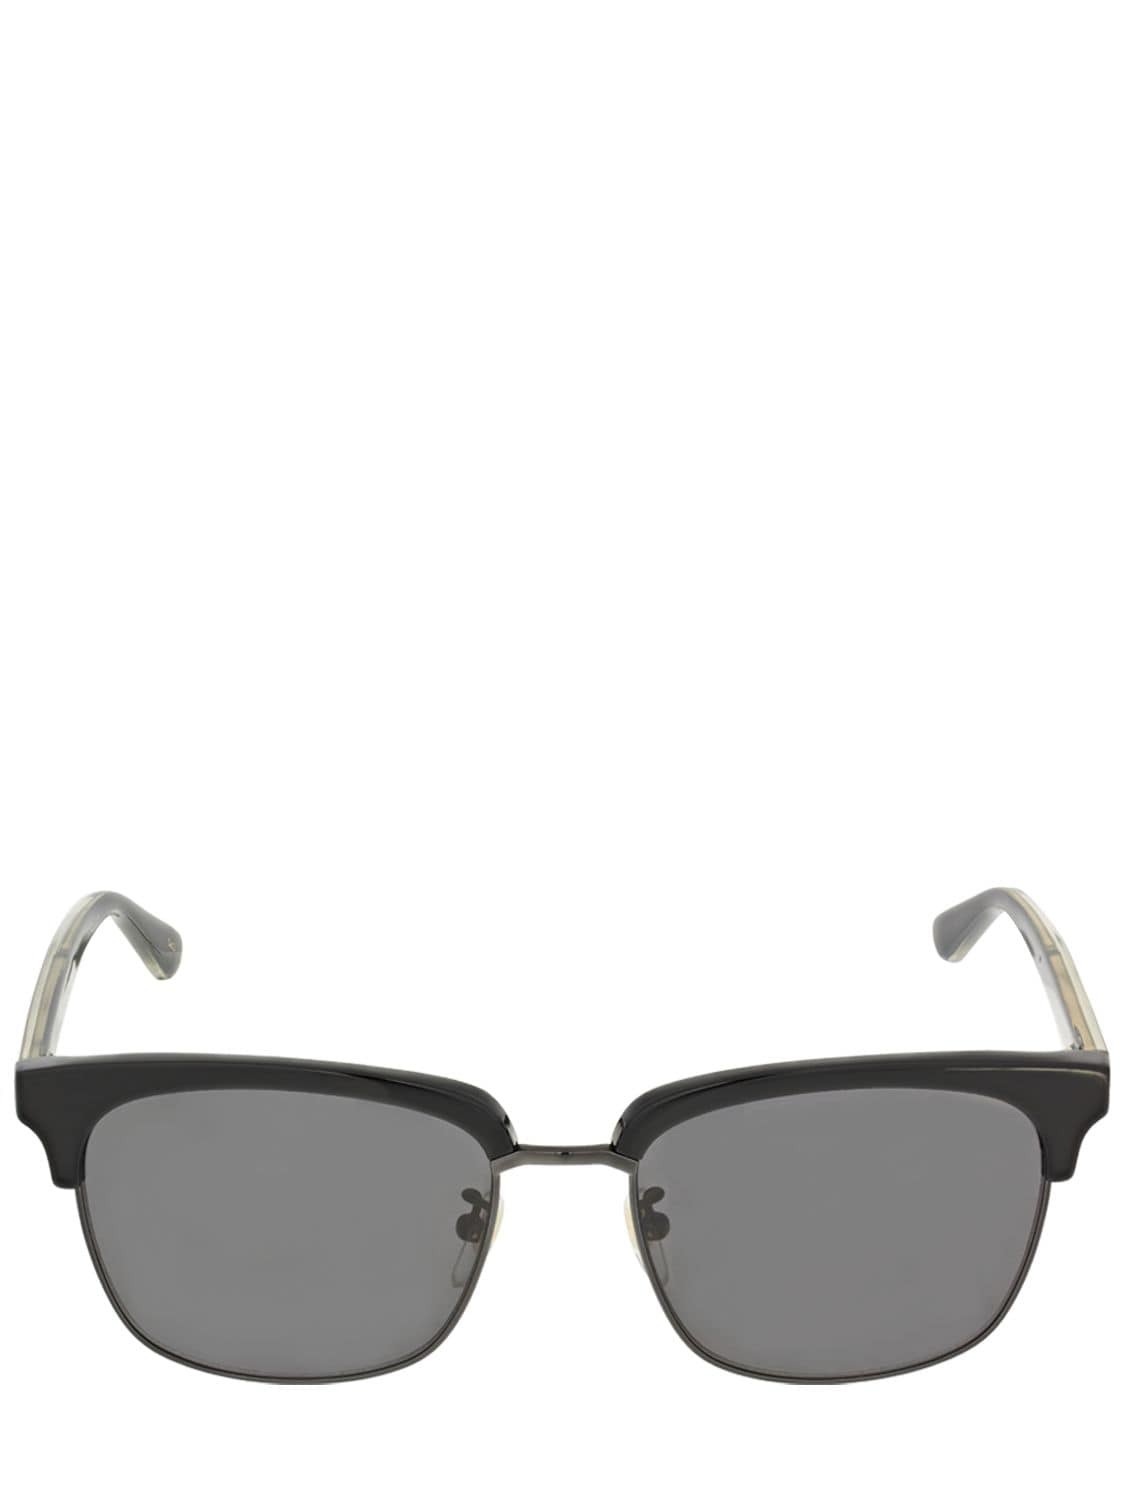 GUCCI Round Metal & Acetate Sunglasses in black / grey